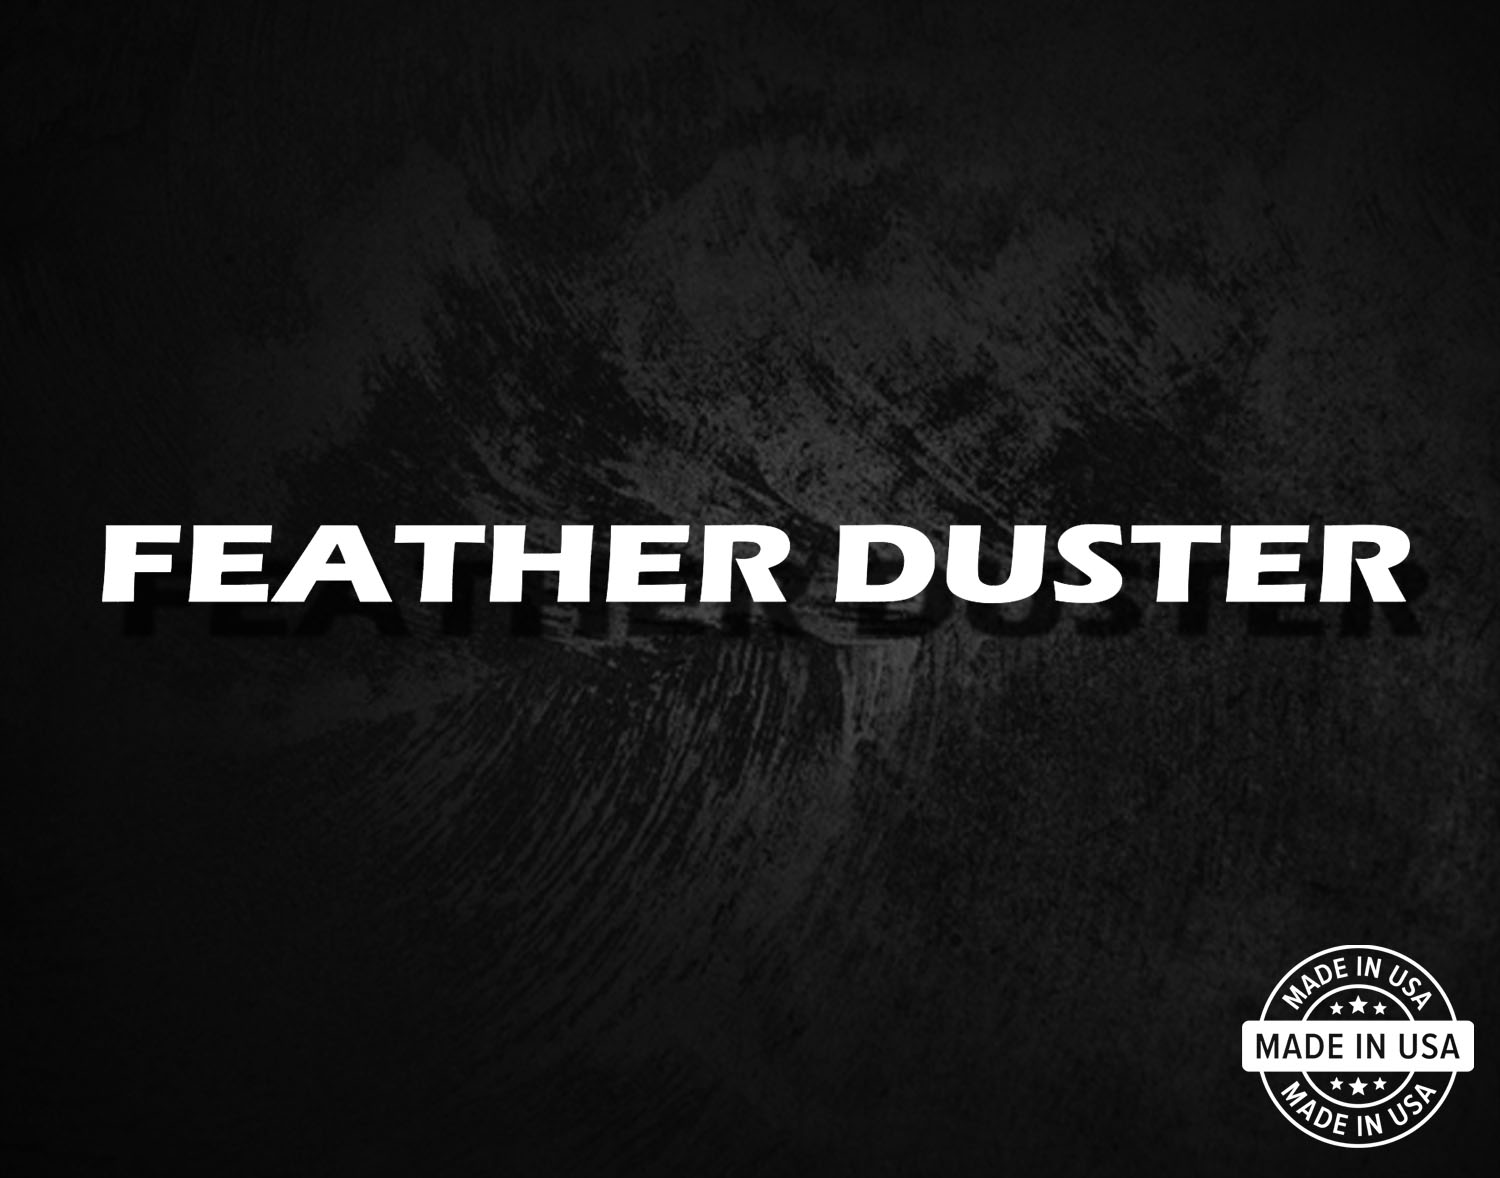 Feather Duster - Shotgun Barrel Decal